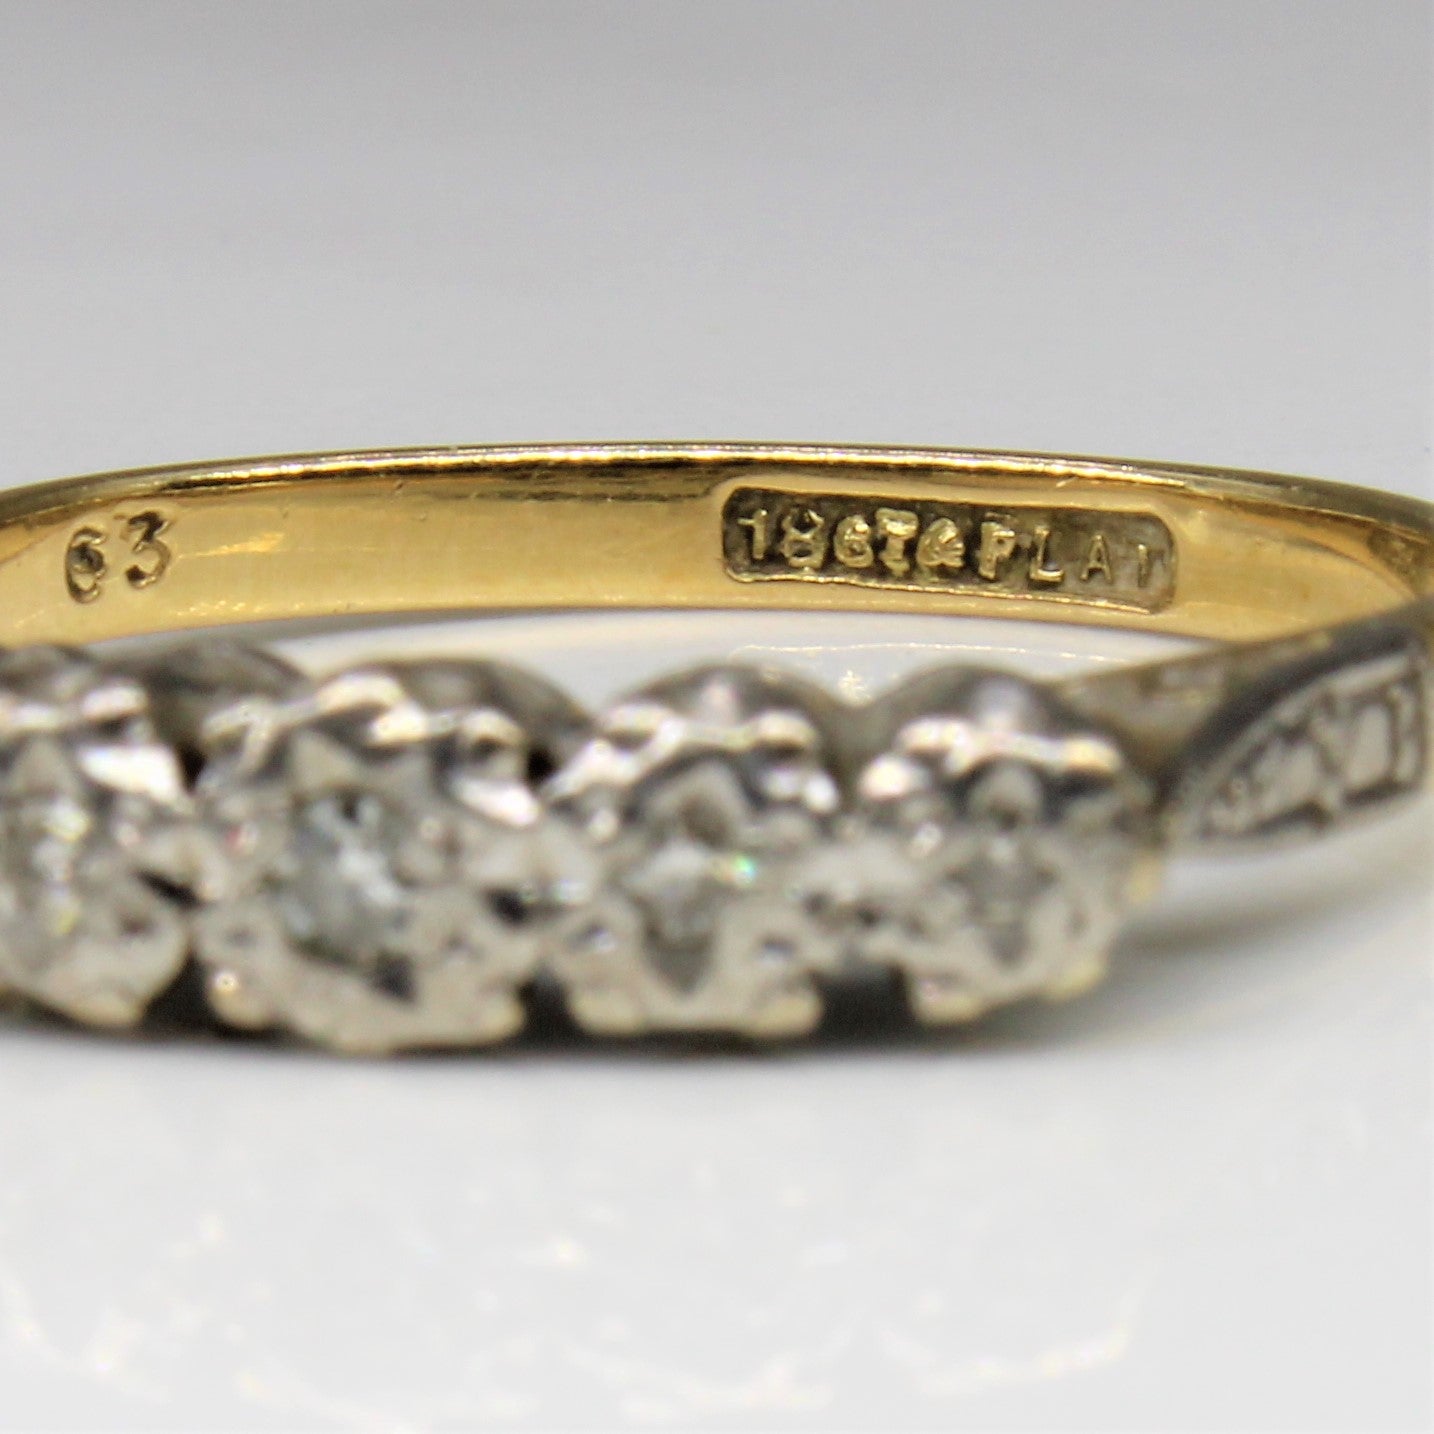 Edwardian Five Stone Diamond Ring | 0.04ctw | SZ 6.25 |